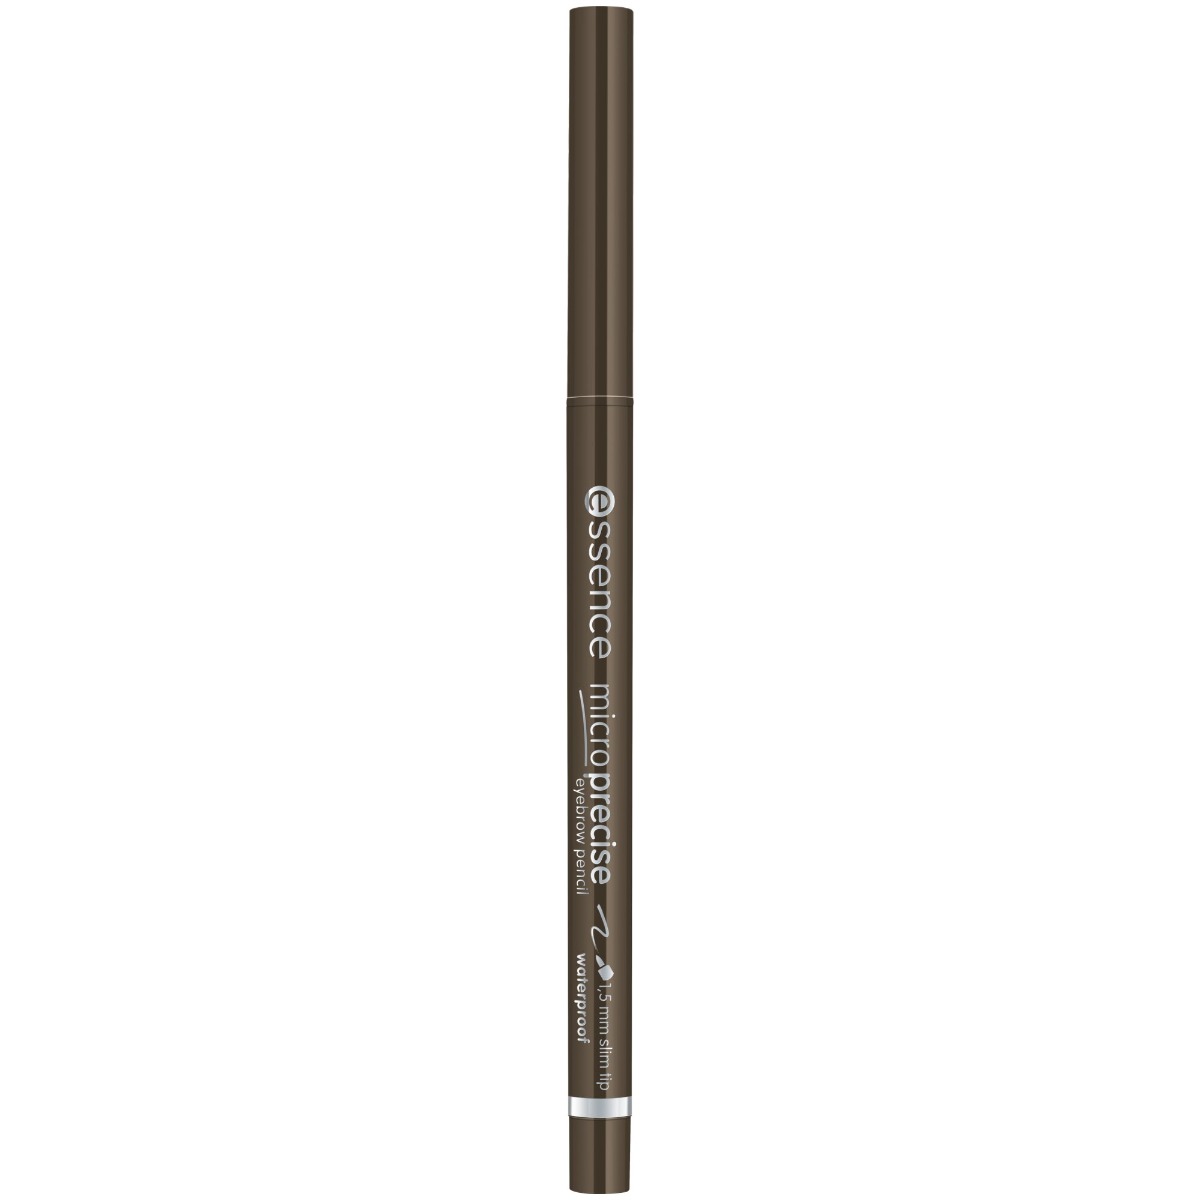 Creion pentru sprancene Micro Precise 05 - Black Brown, 0.05g, Essence